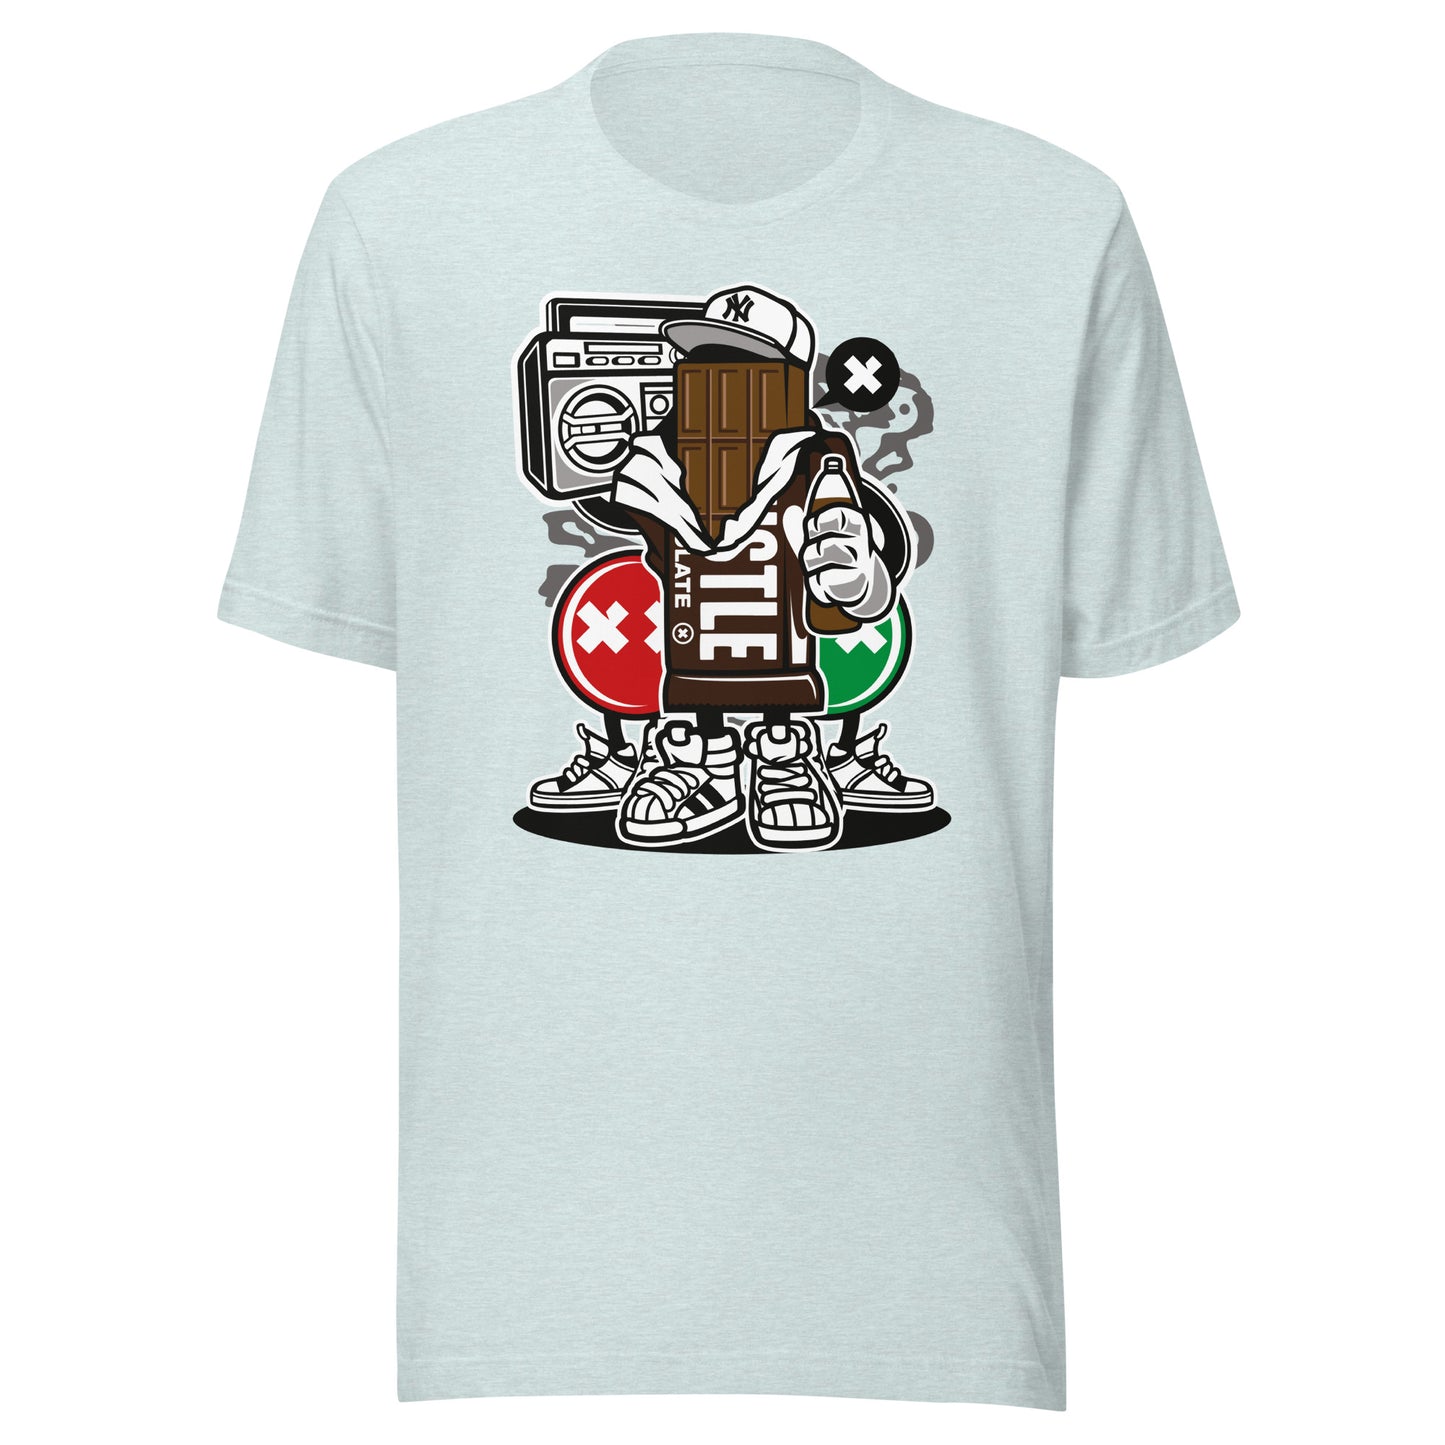 Unisex custom design t-shirt